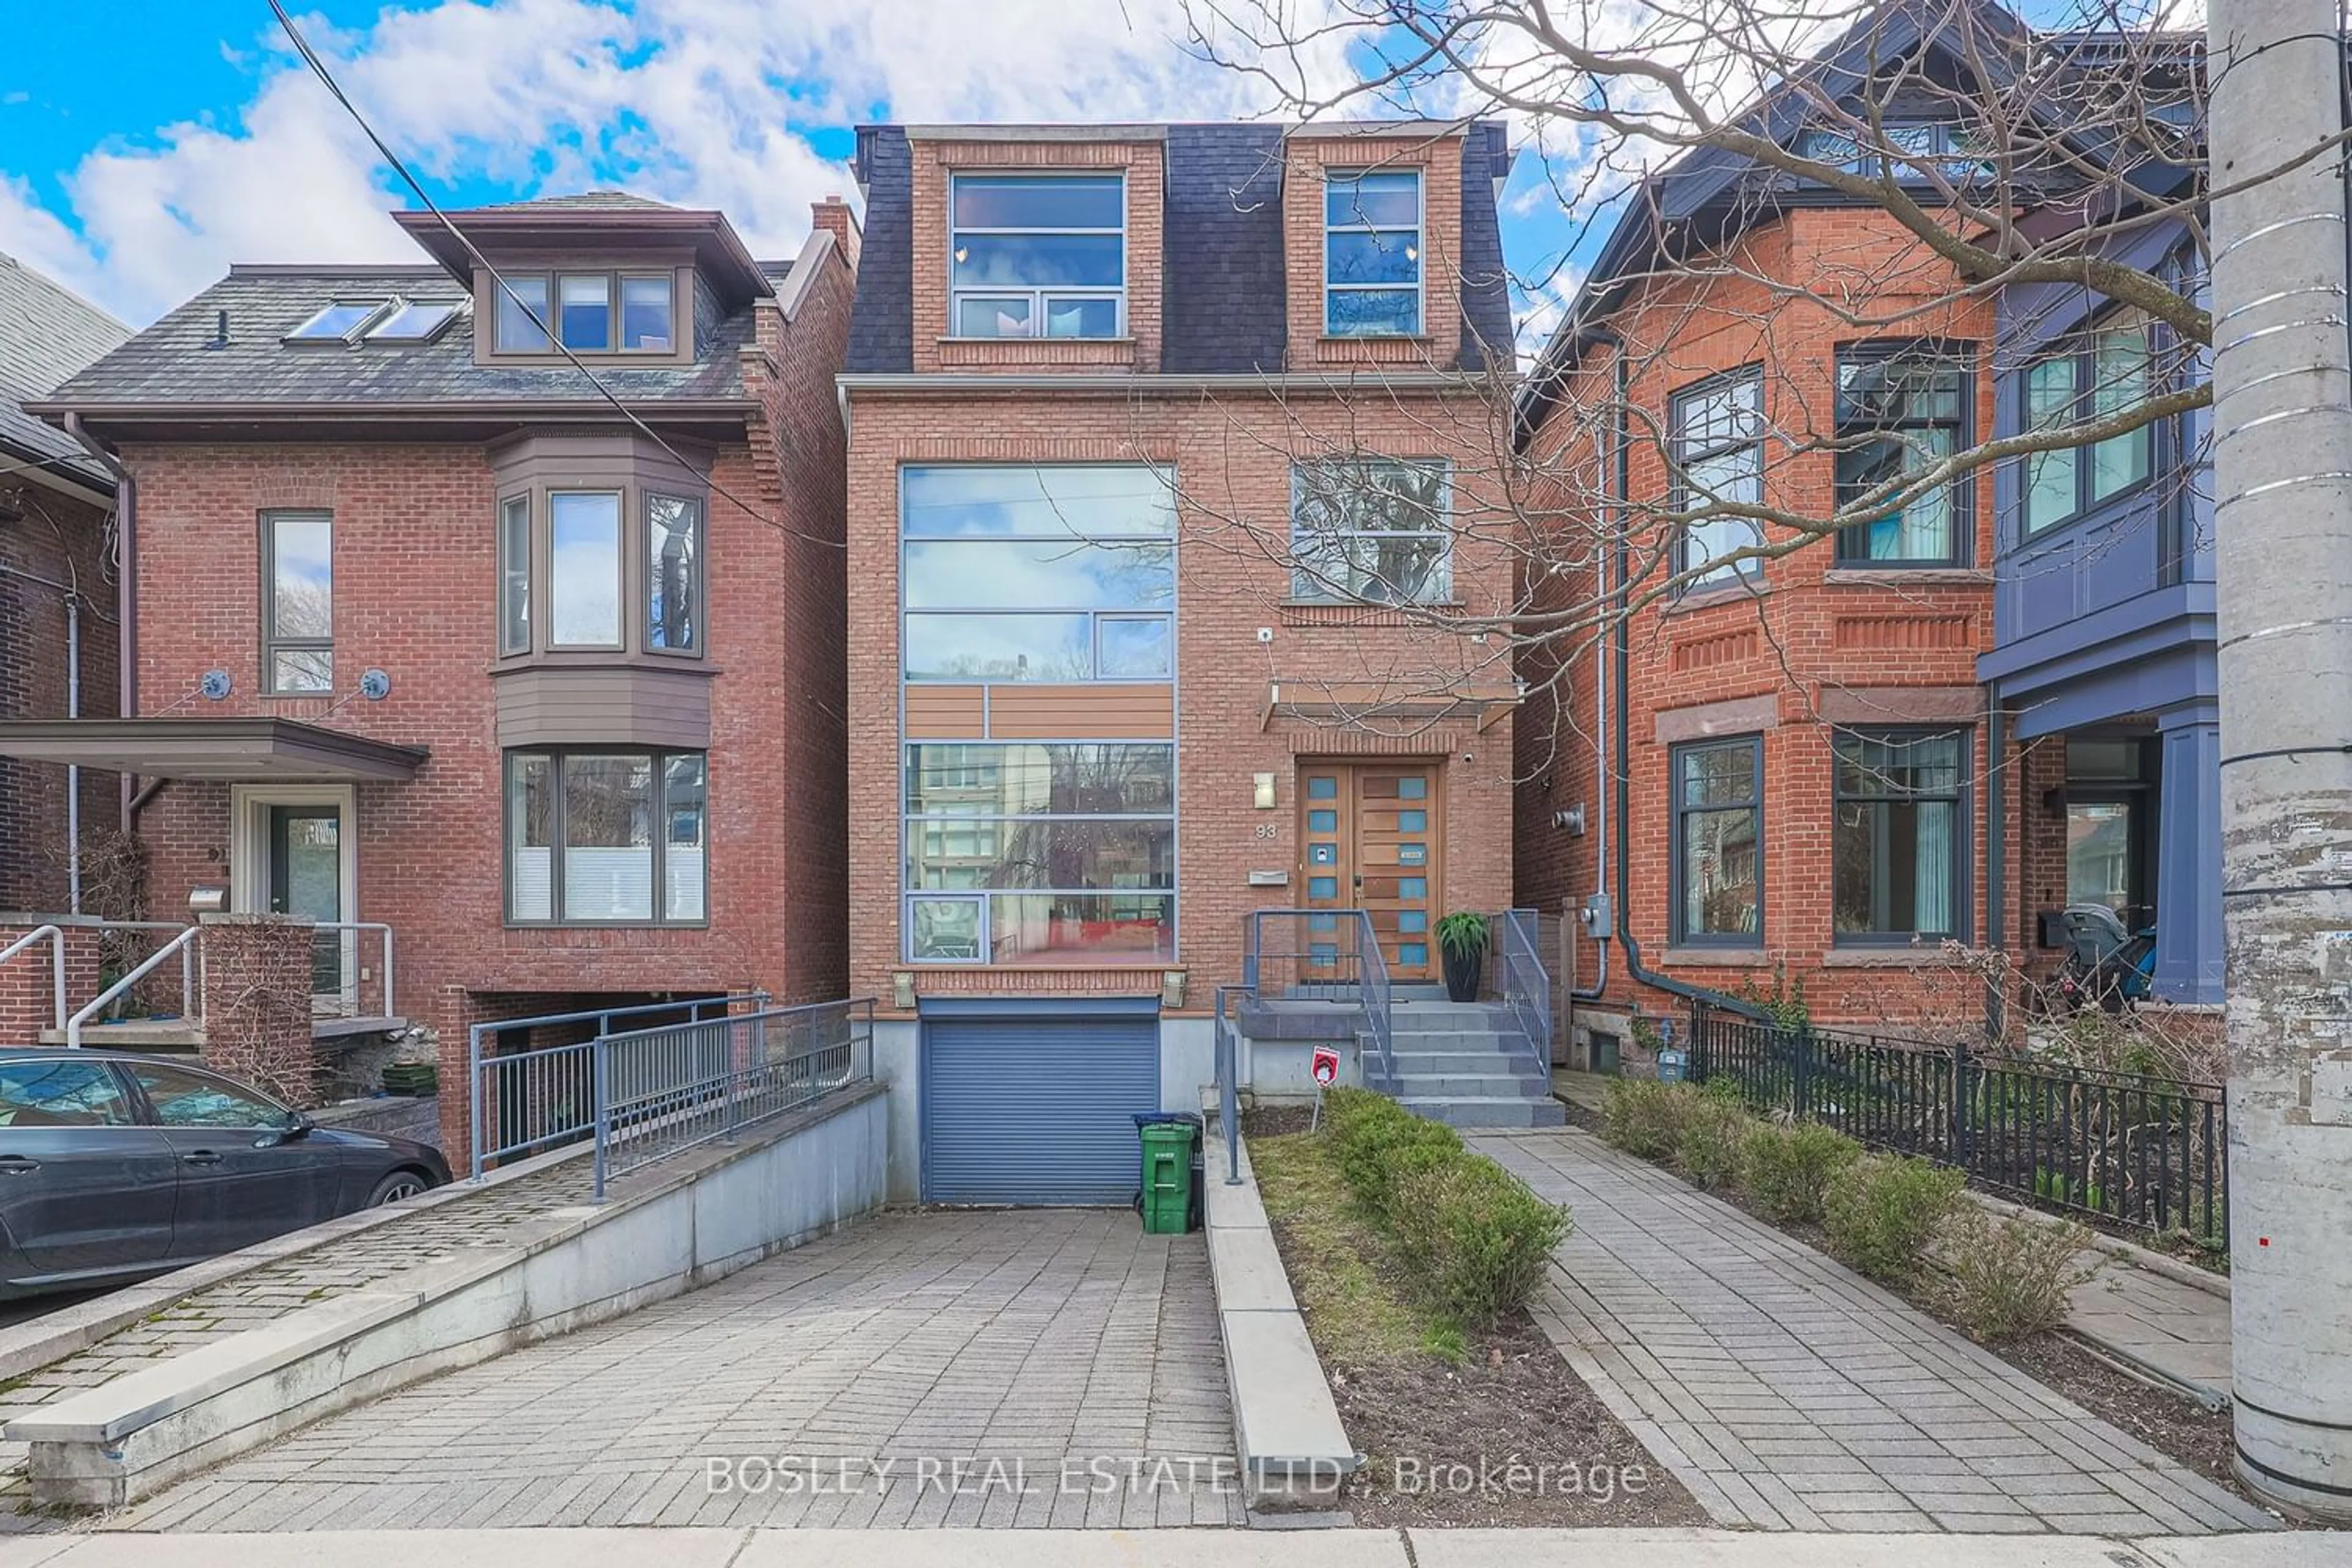 Home with brick exterior material for 93 Walker Ave, Toronto Ontario M4V 1G3